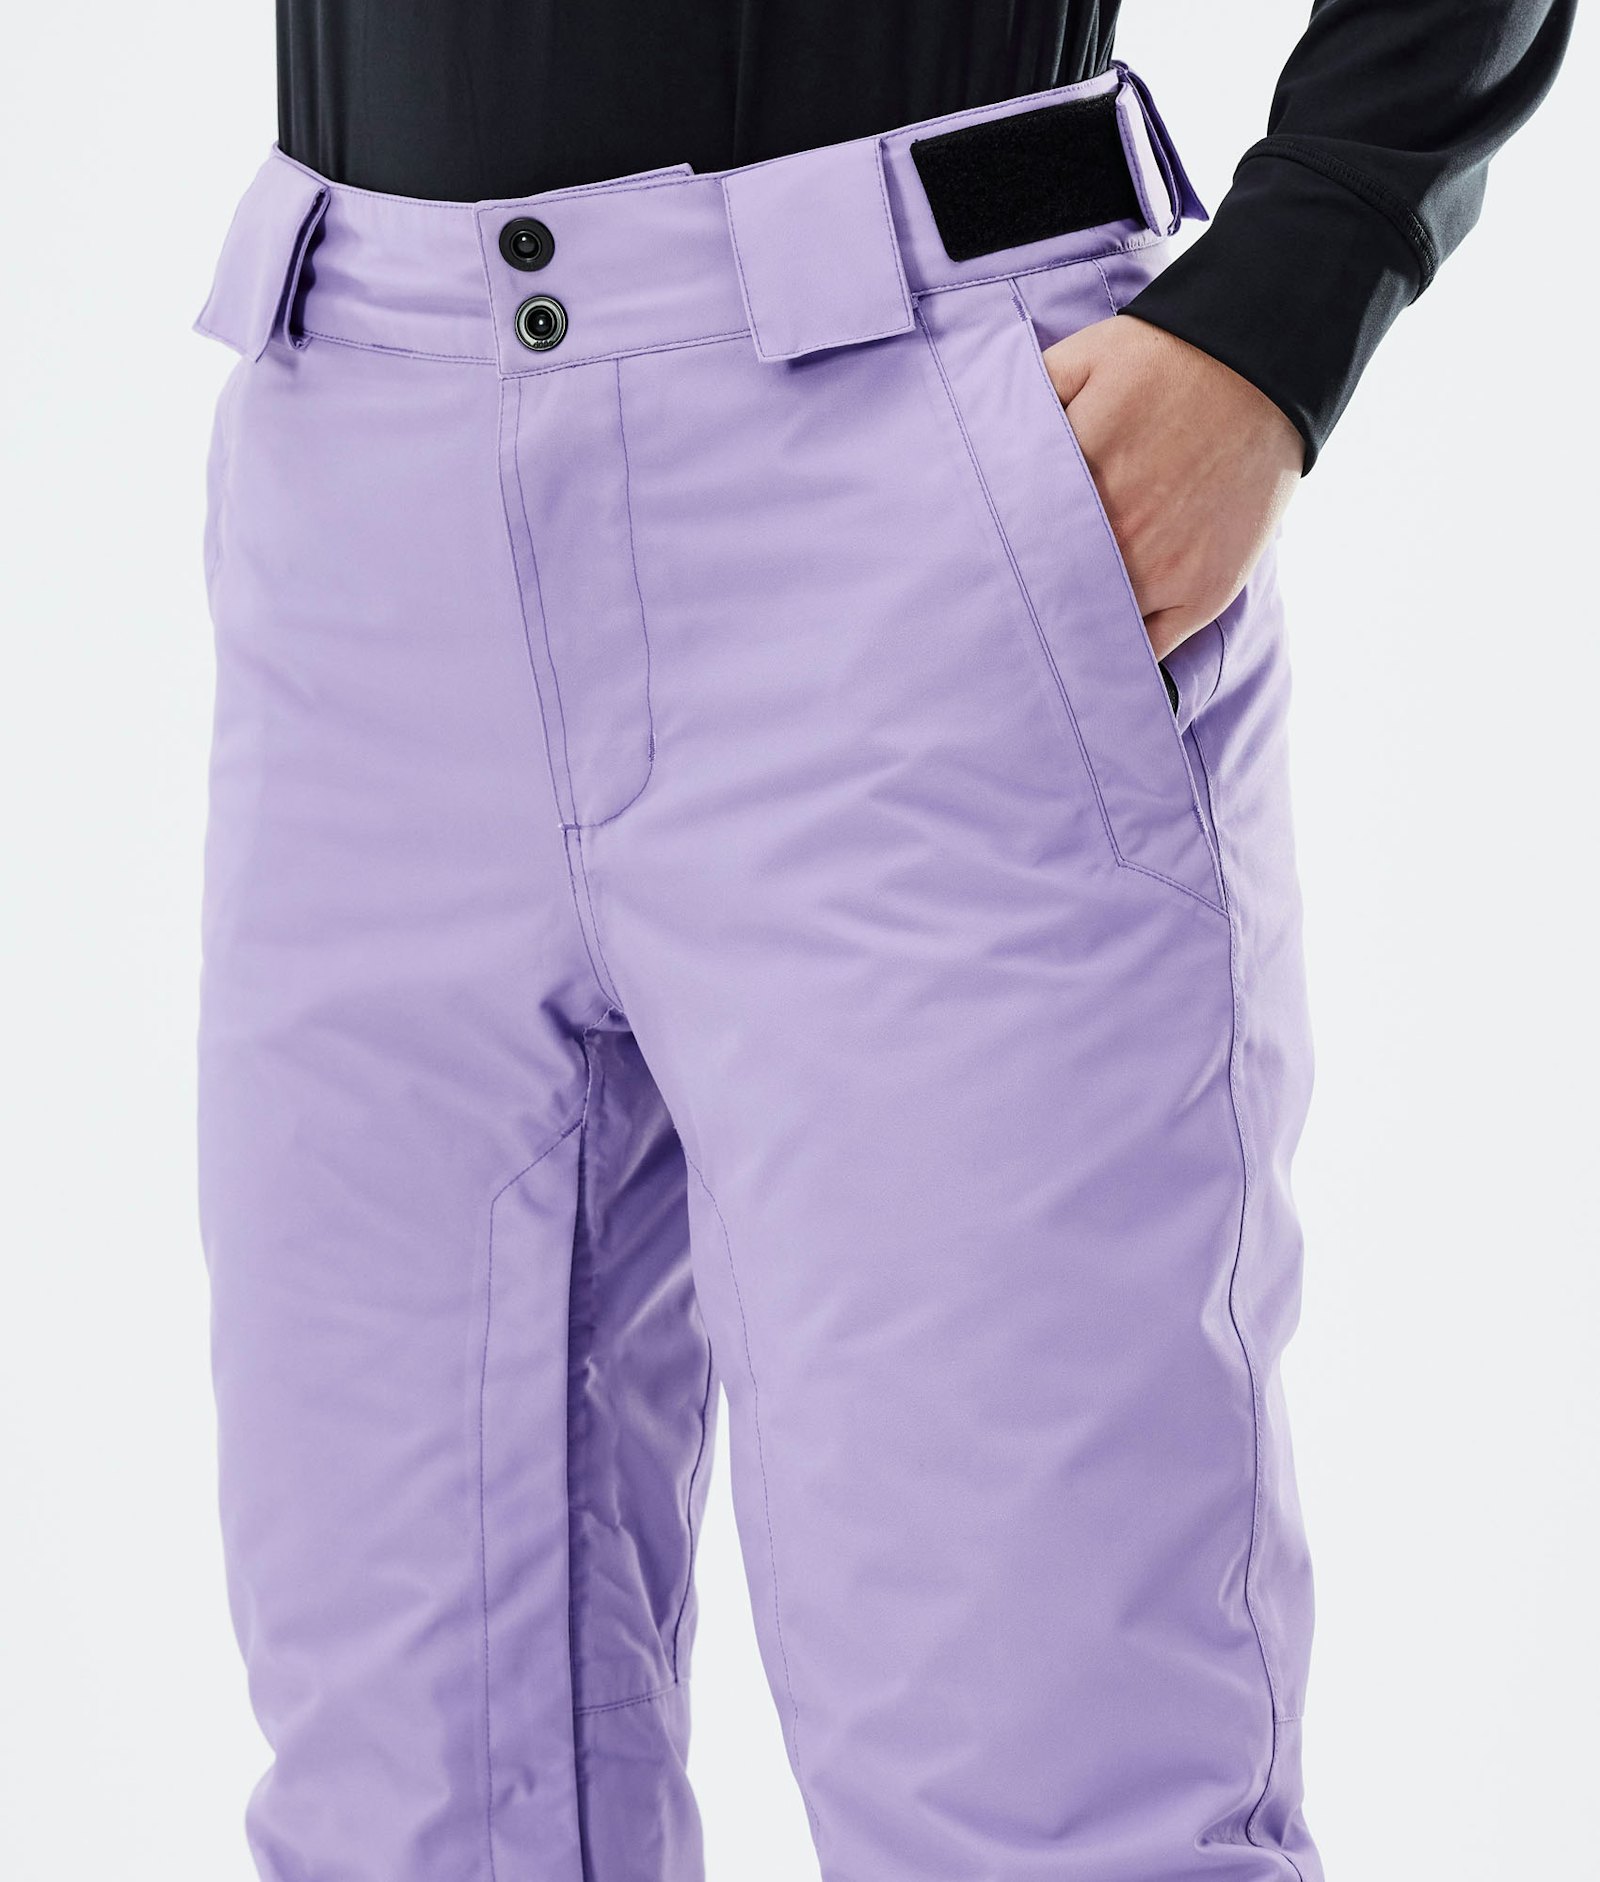 Con W 2021 Pantalon de Snowboard Femme Faded Violet